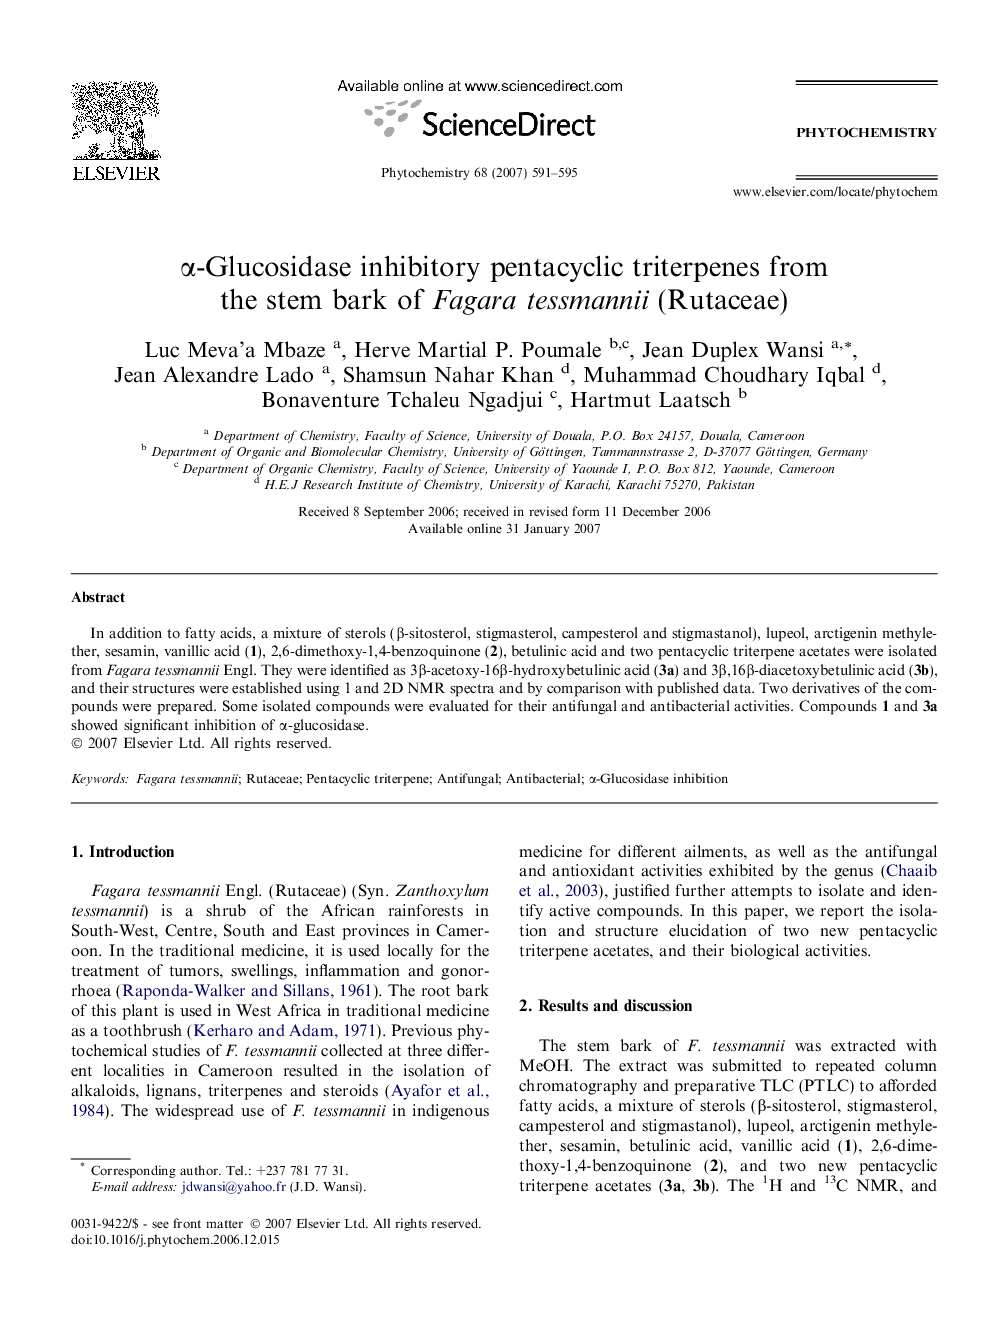 Î±-Glucosidase inhibitory pentacyclic triterpenes from the stem bark of Fagara tessmannii (Rutaceae)